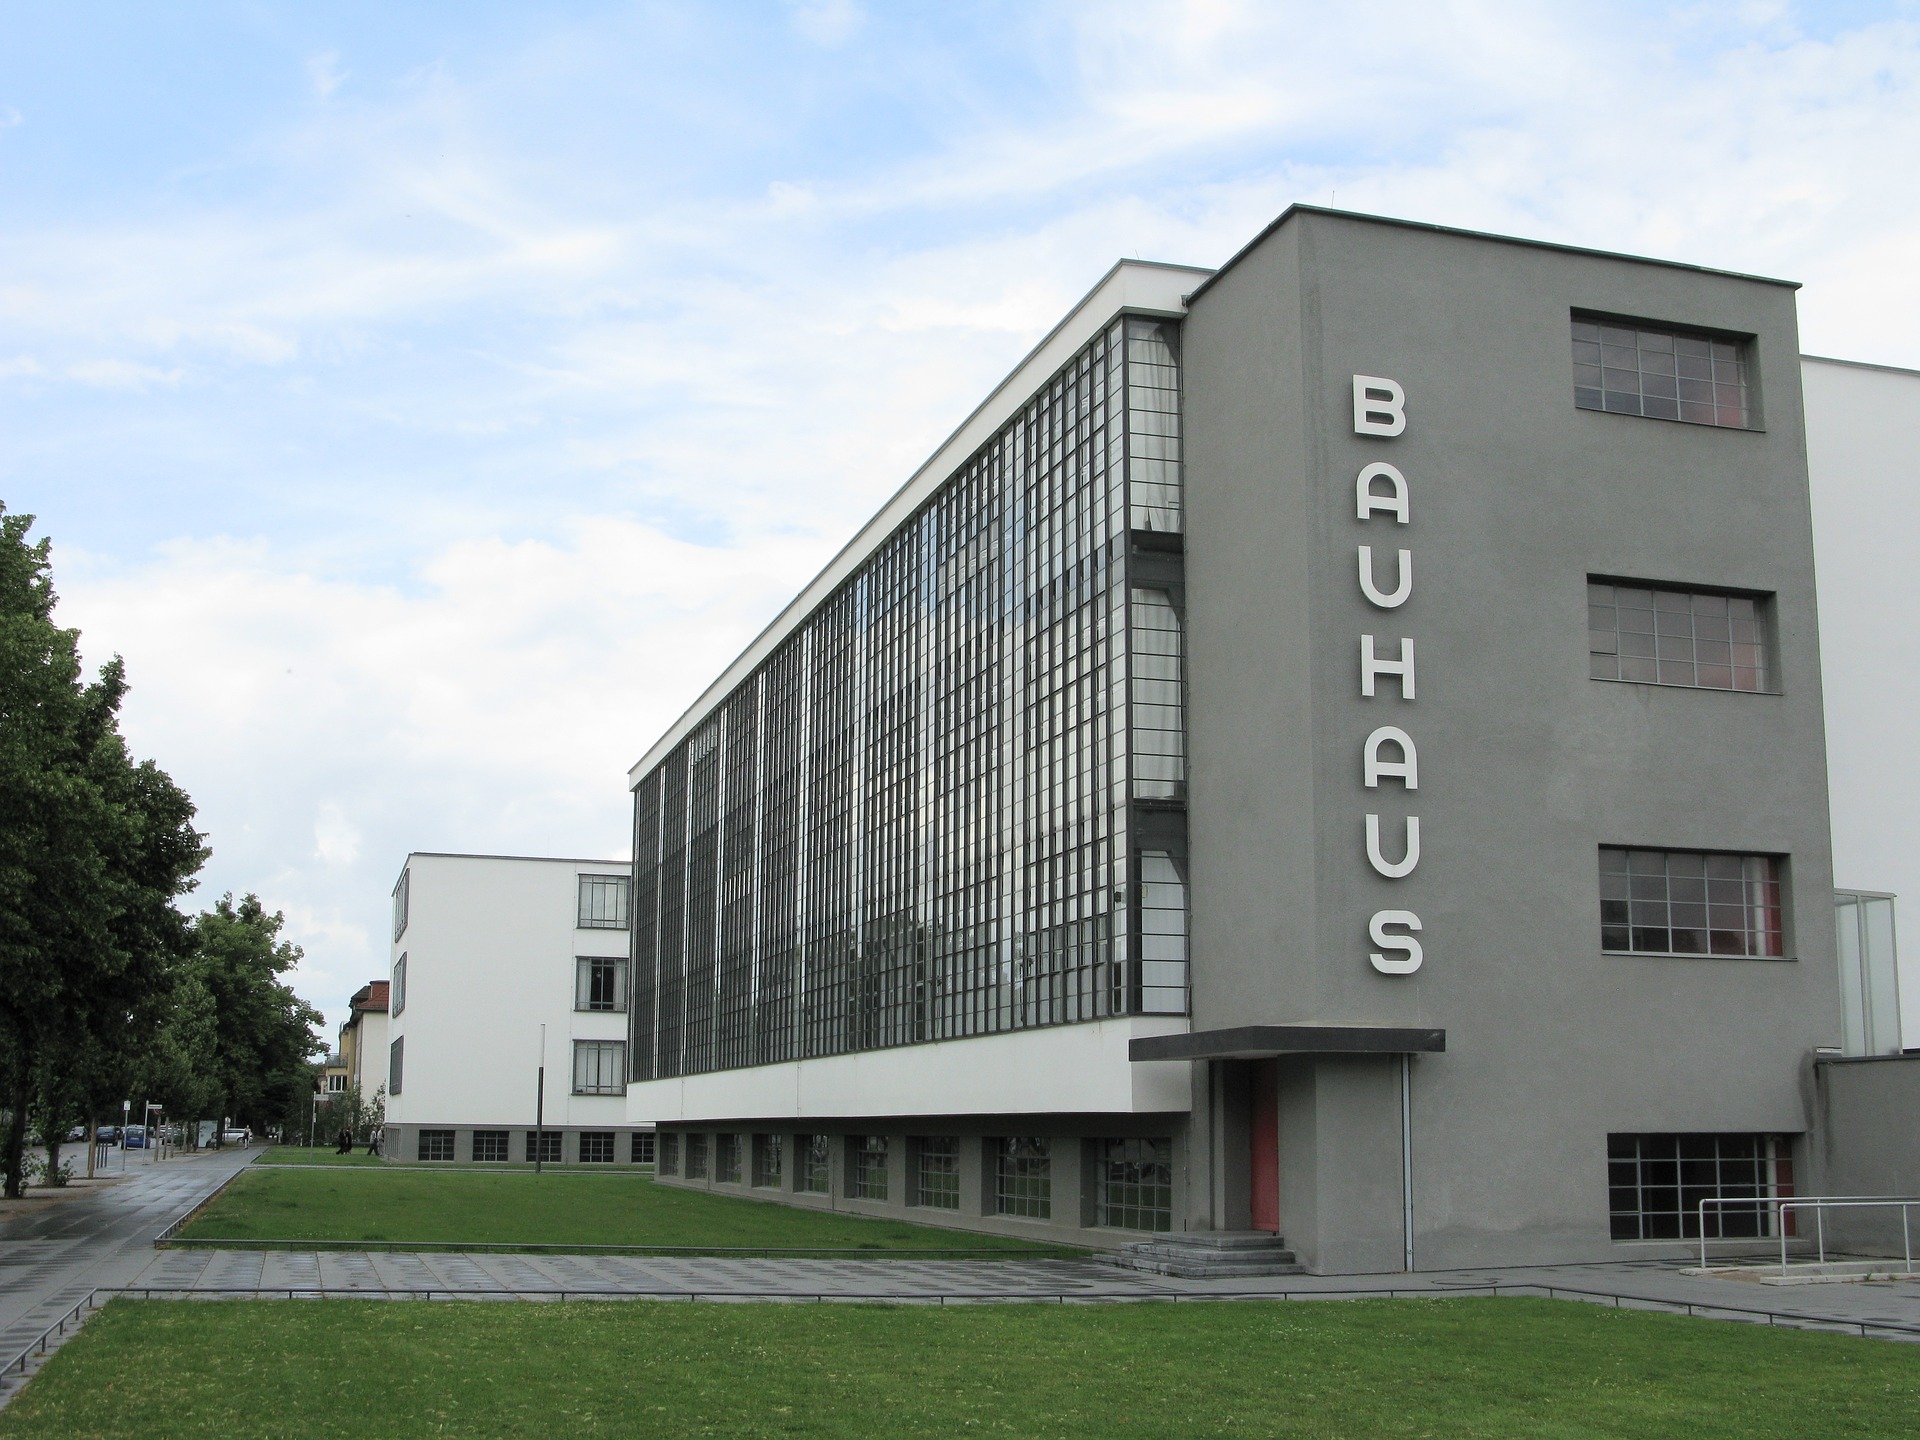 100 Years Of Bauhaus Industrial Design